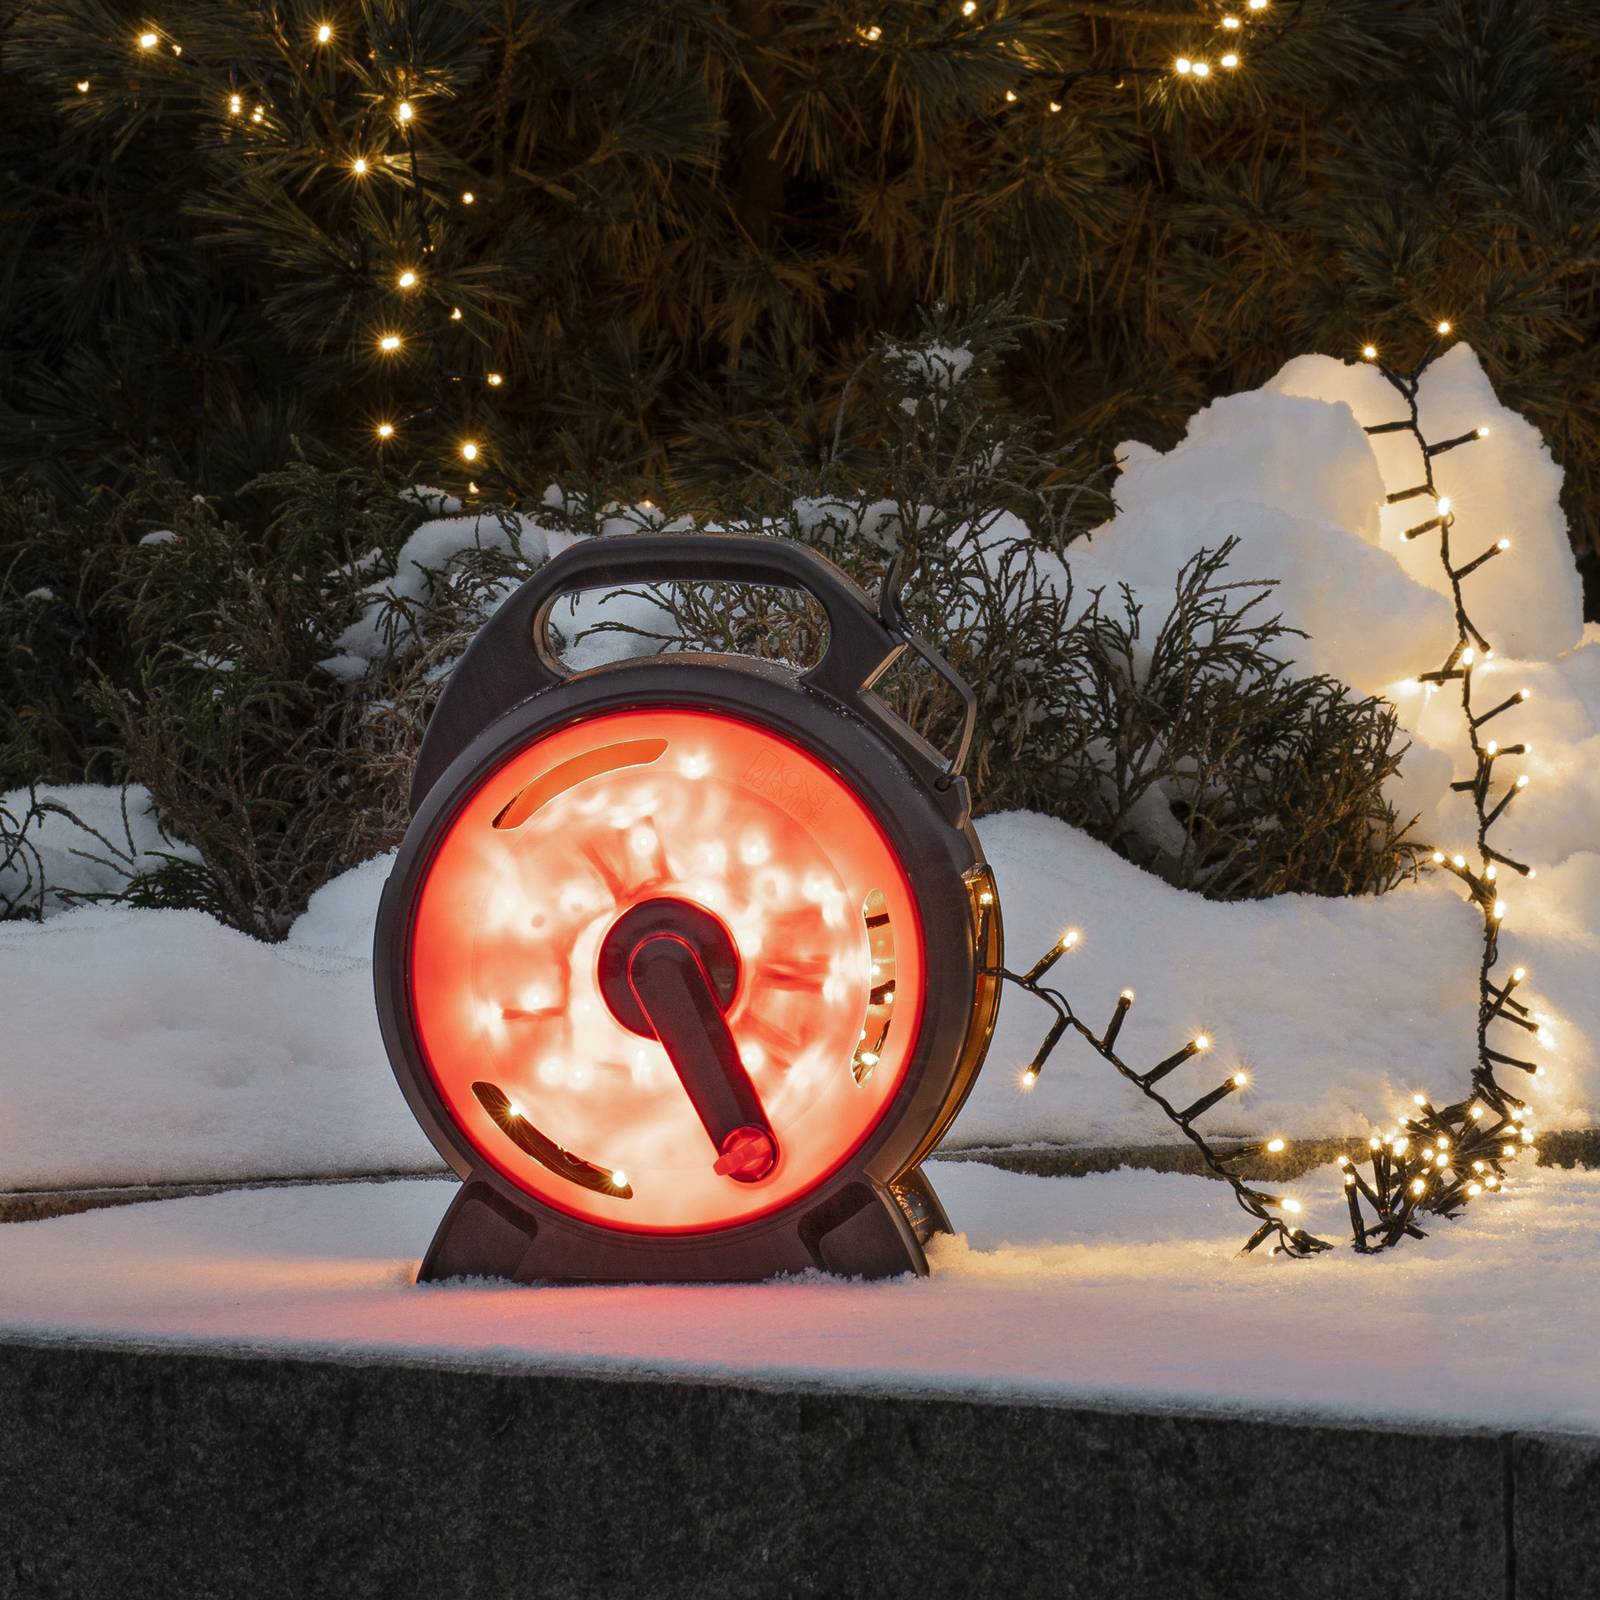 Konstsmide Christmas LED-Lichterkette Compact warmweiß 1200 LEDs 26,38m